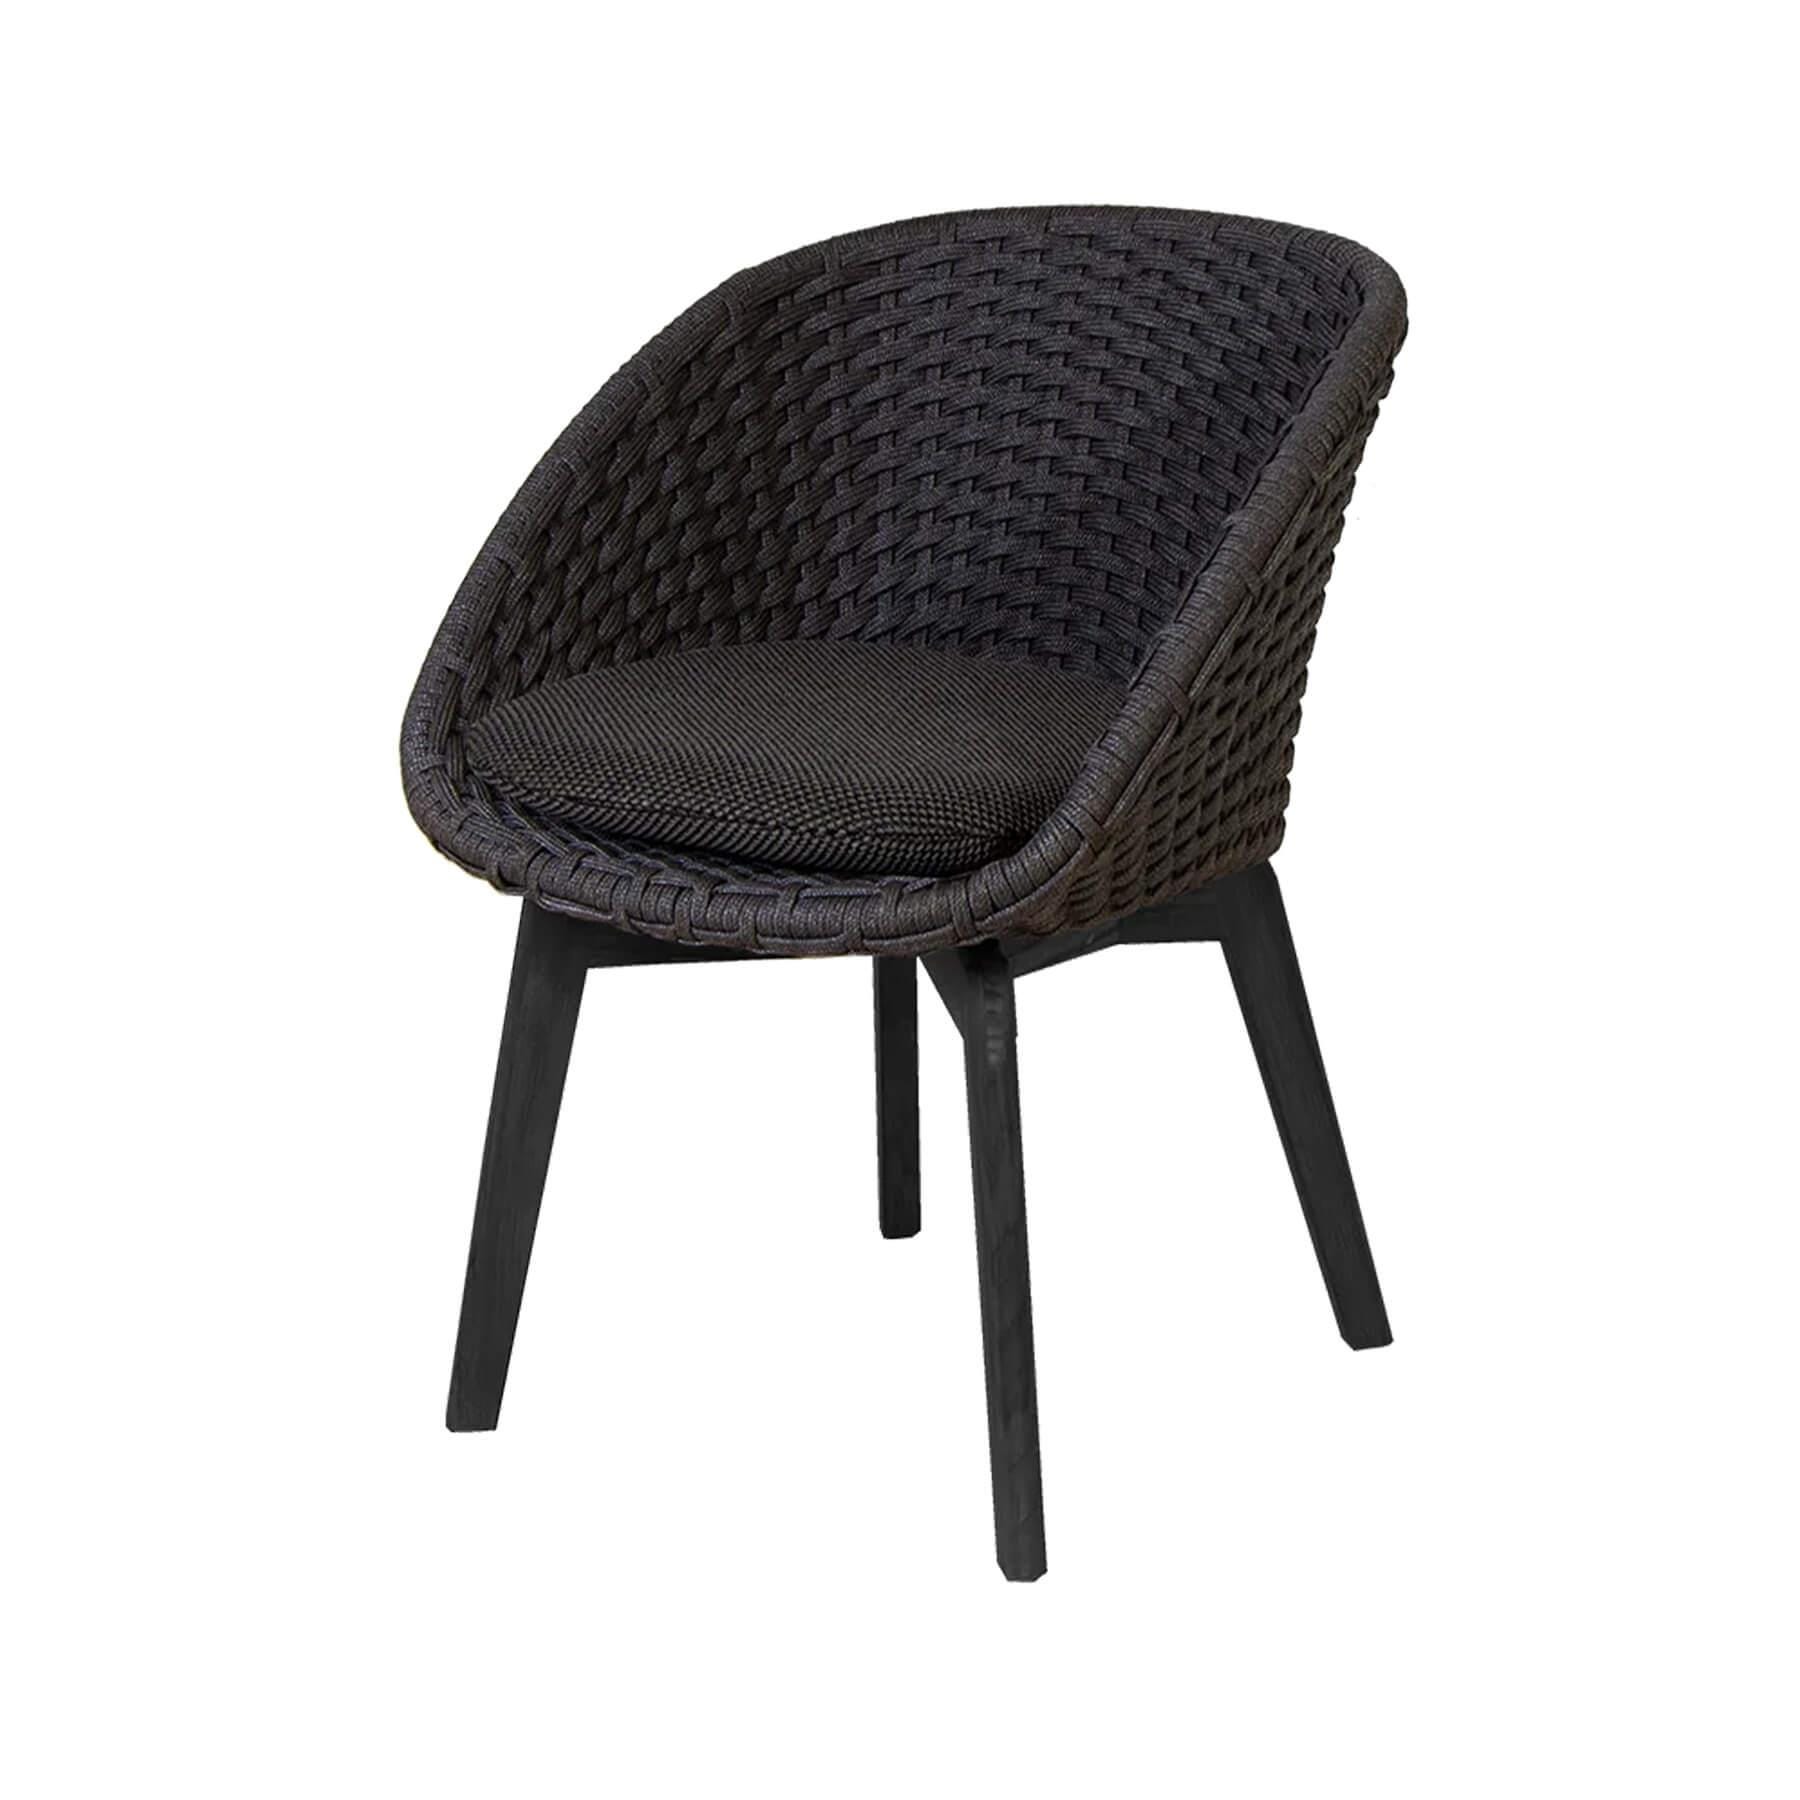 Caneline Peacock Outdoor Chair Black And Aluminium Legs Dark Grey Cushion